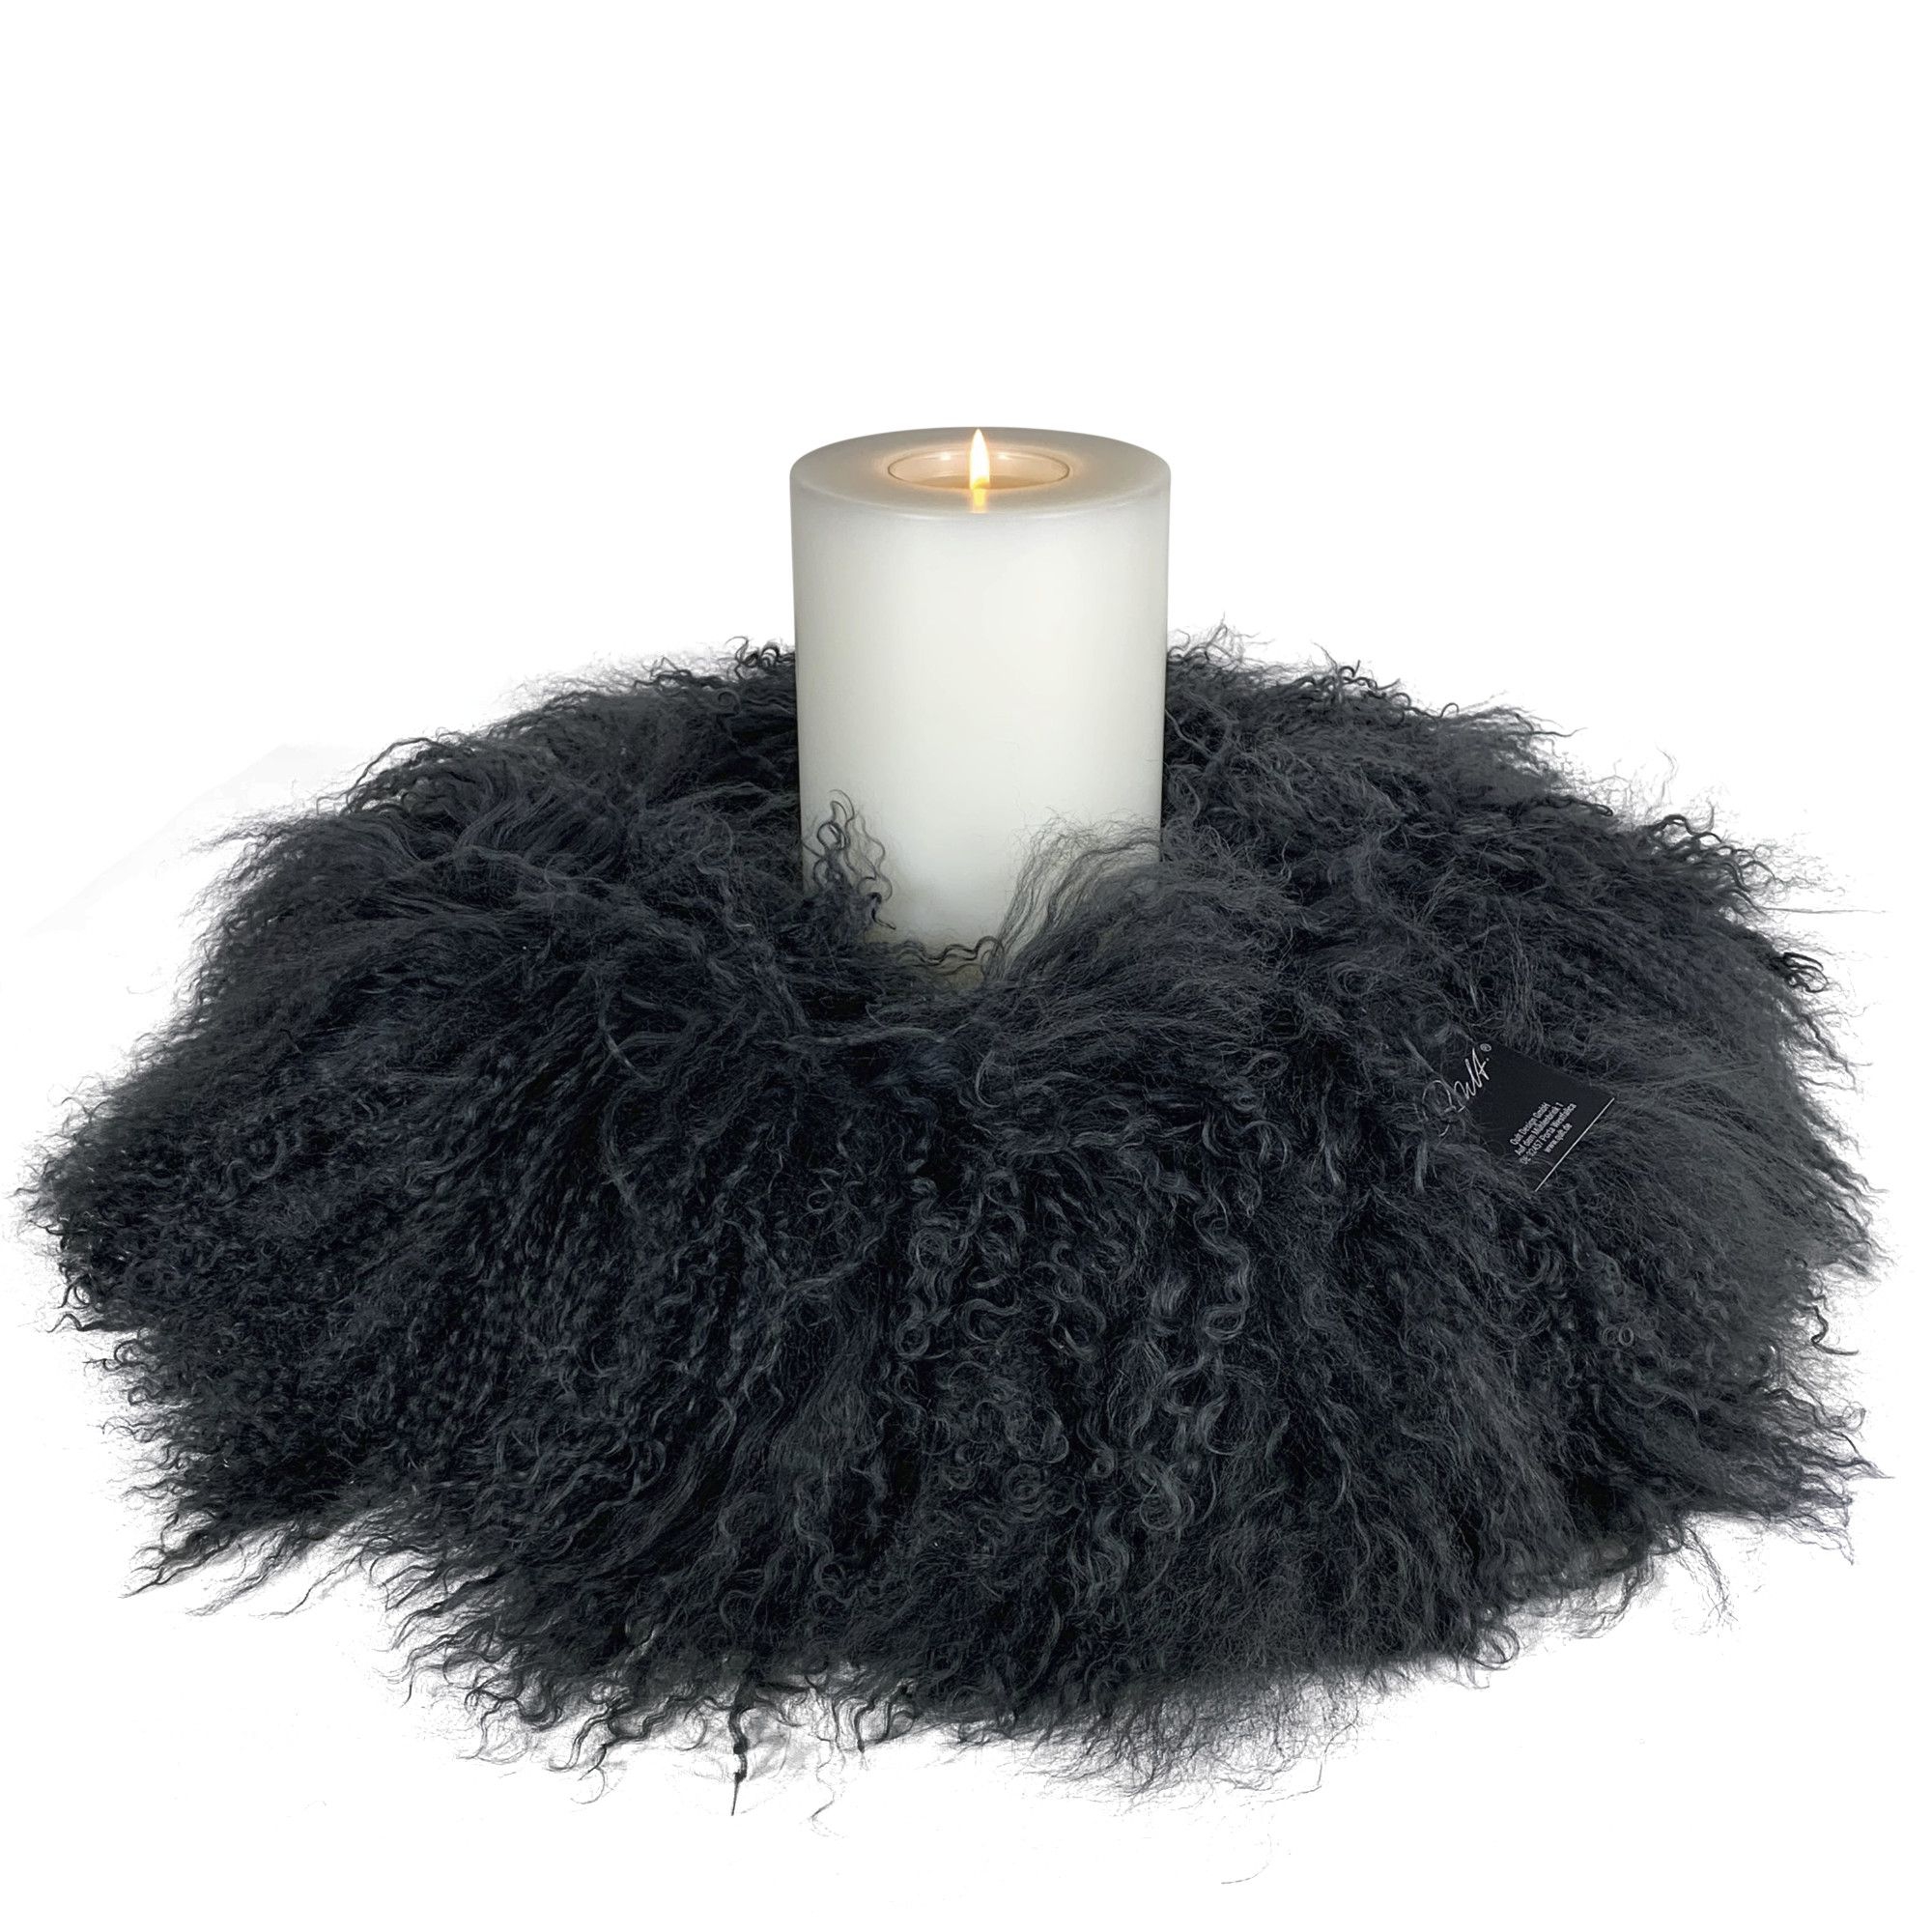 Qult Farluce Candle Real Fur - Merino Lamb Anthracite - Candle wreath - Ø 45 cm x H Fur 10 cm